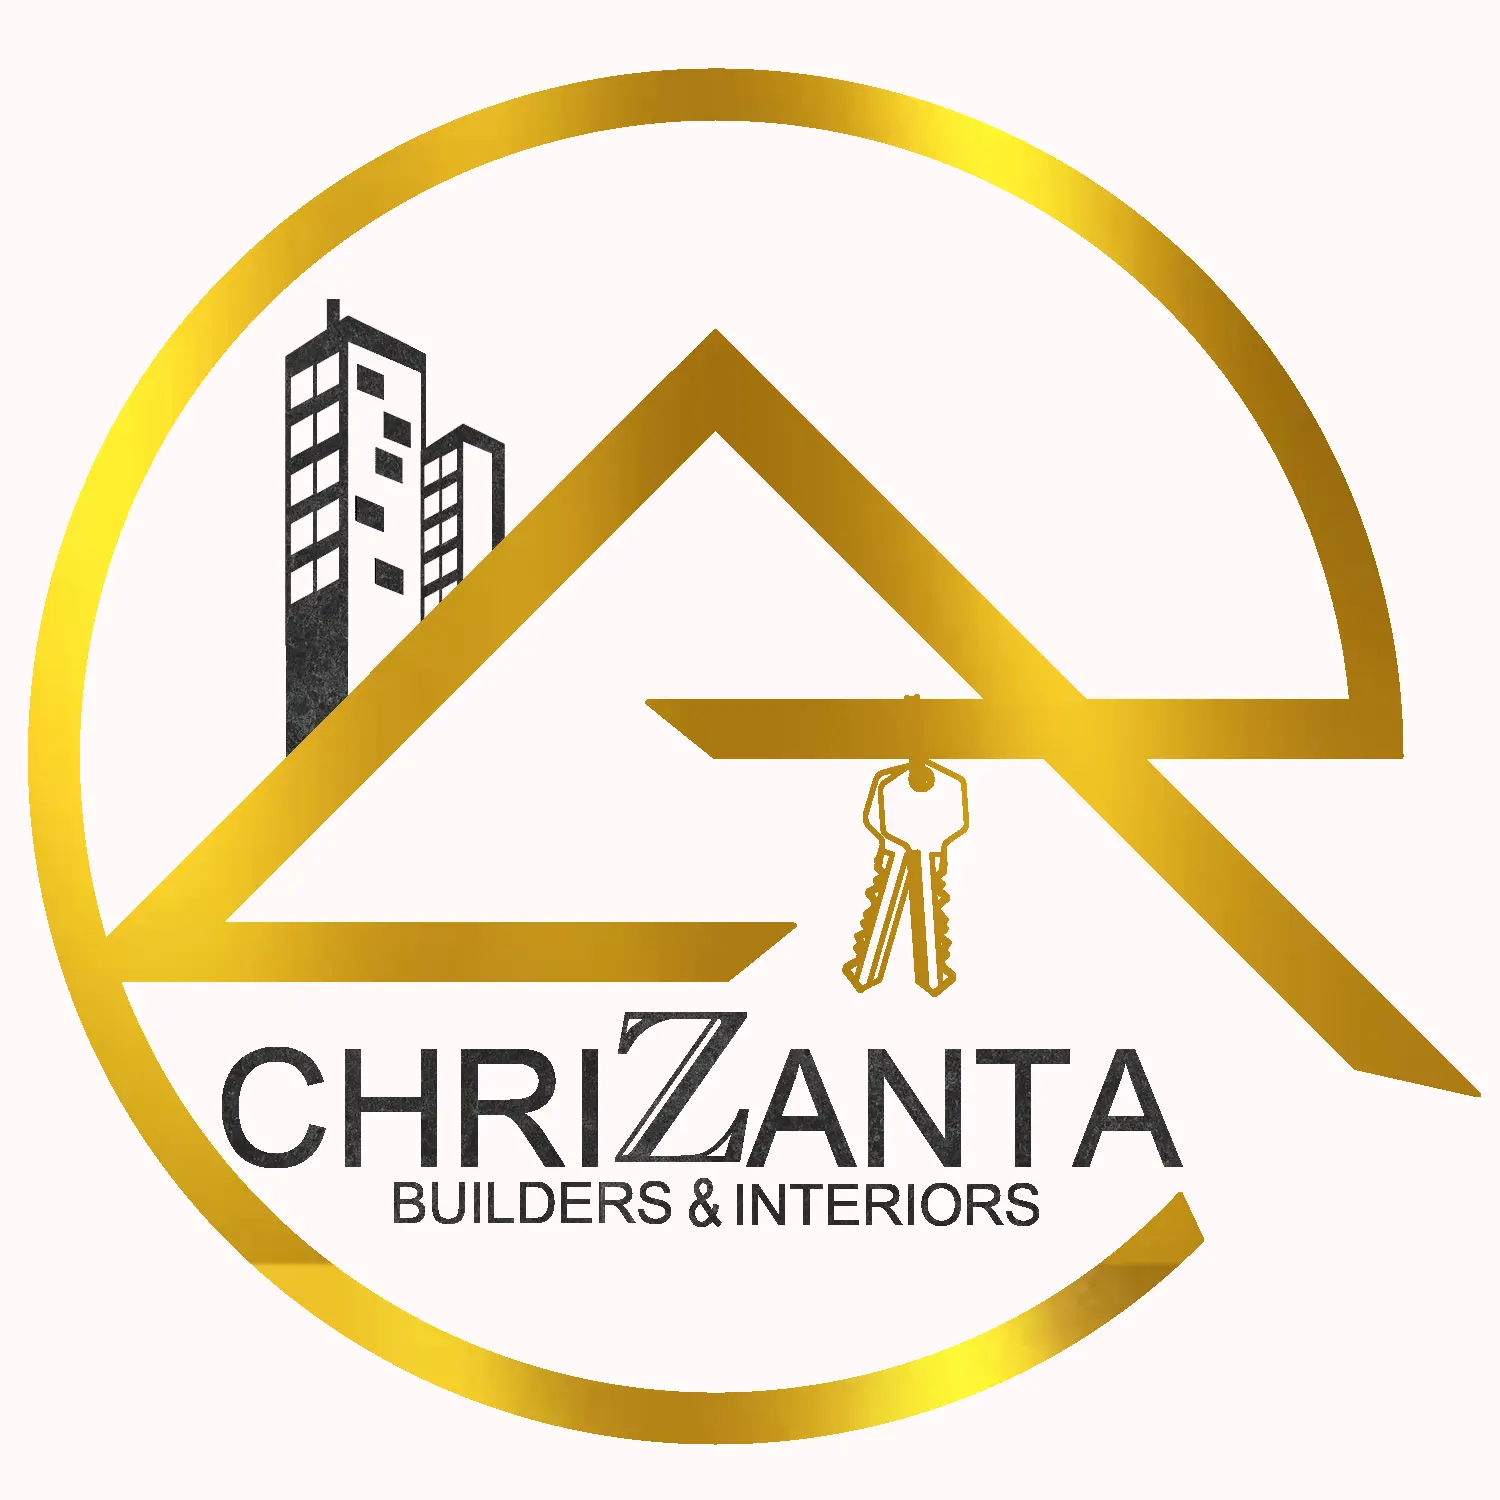 Chrizanta Builders And Interiors